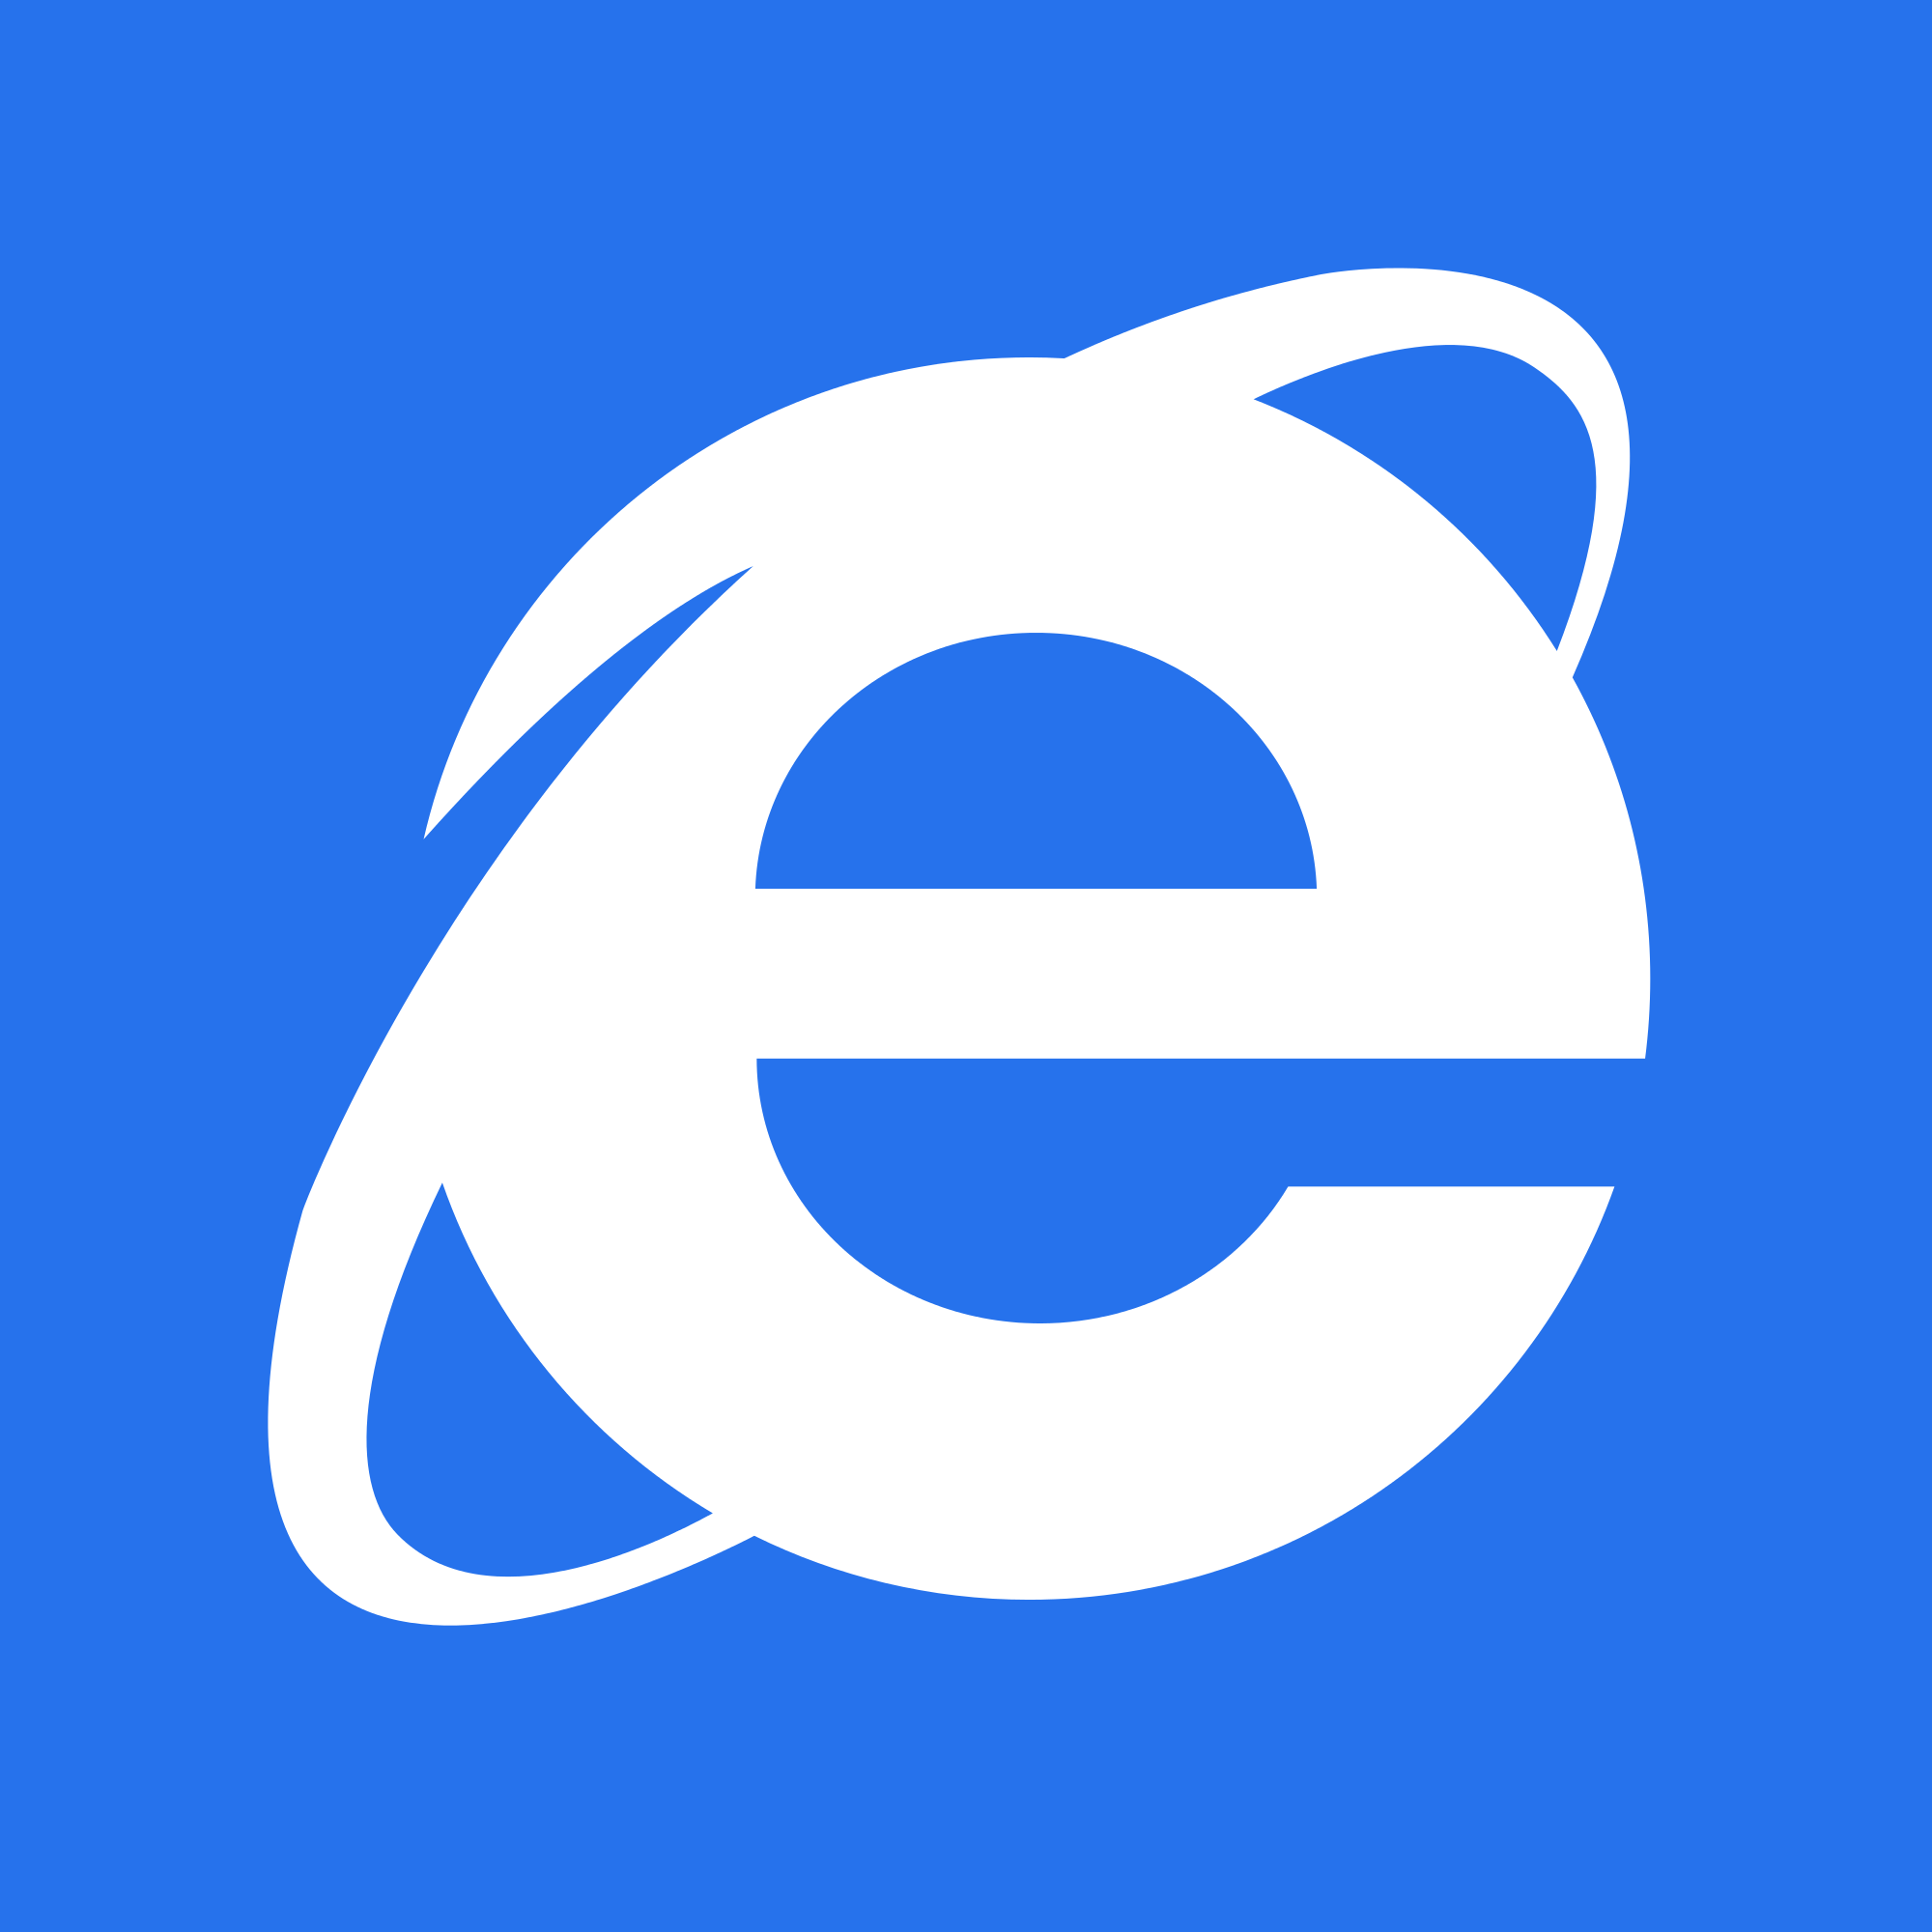 Internet Explorer Logo - File:Internet Explorer 10 start icon.svg - Wikimedia Commons